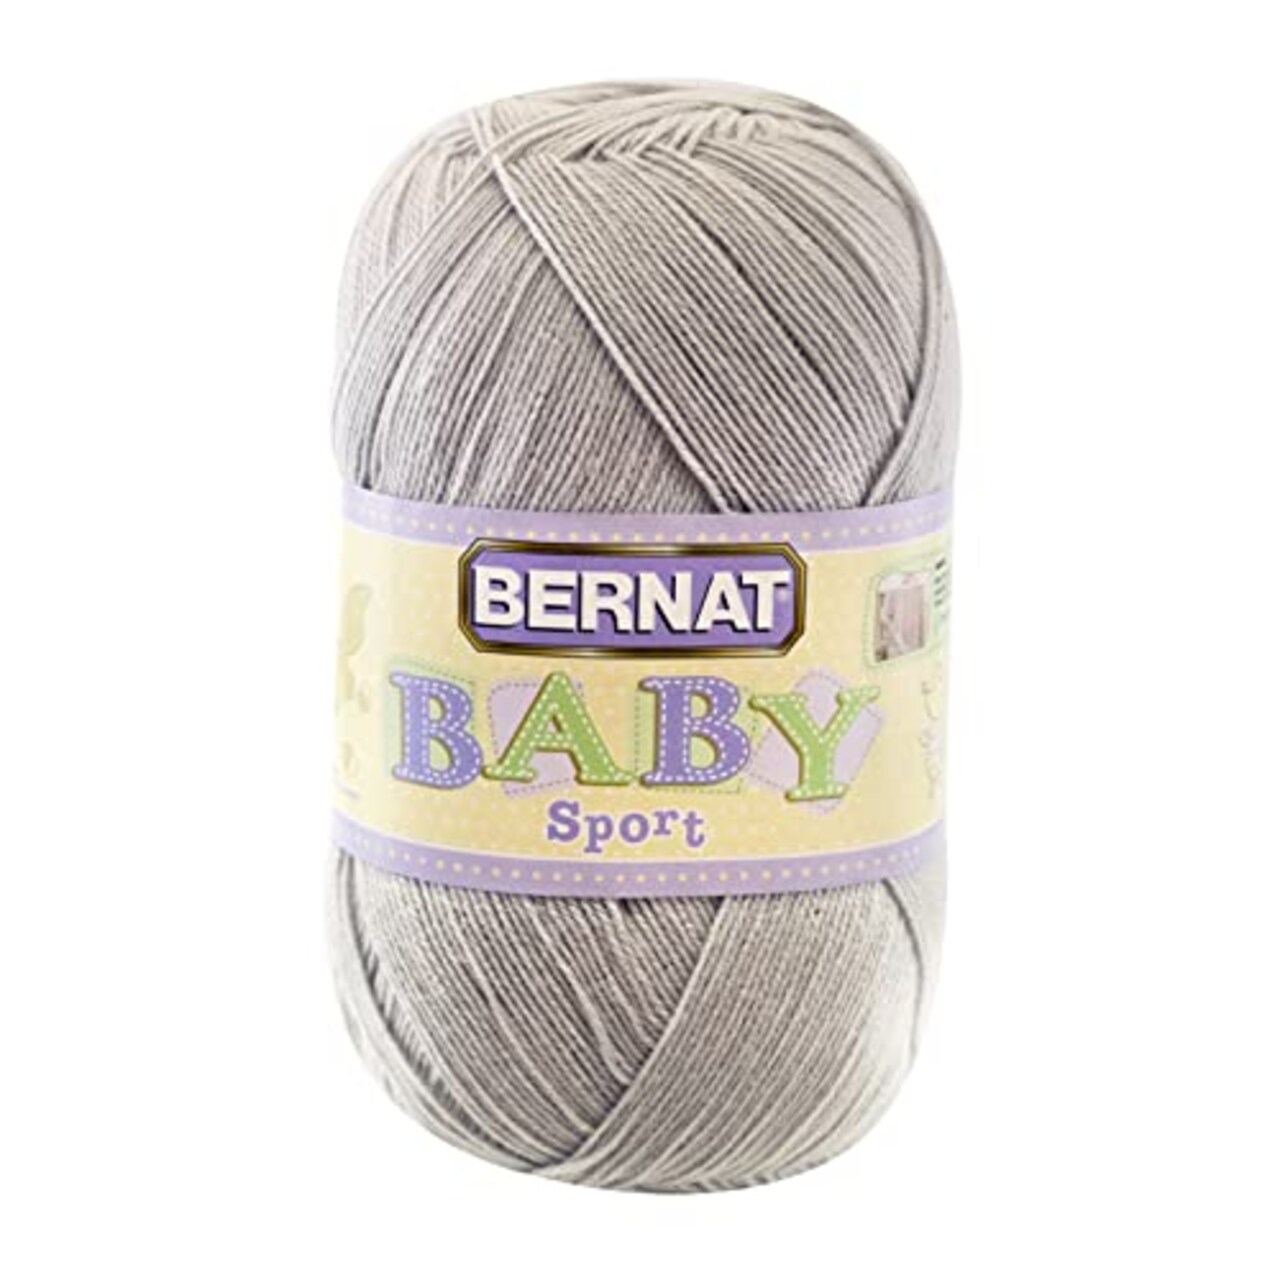 Bernat Baby Sport BB Baby Gray Yarn - 1 Pack of 12.3oz/350g - Acrylic - #3  Light - 1256 Yards - Knitting/Crochet